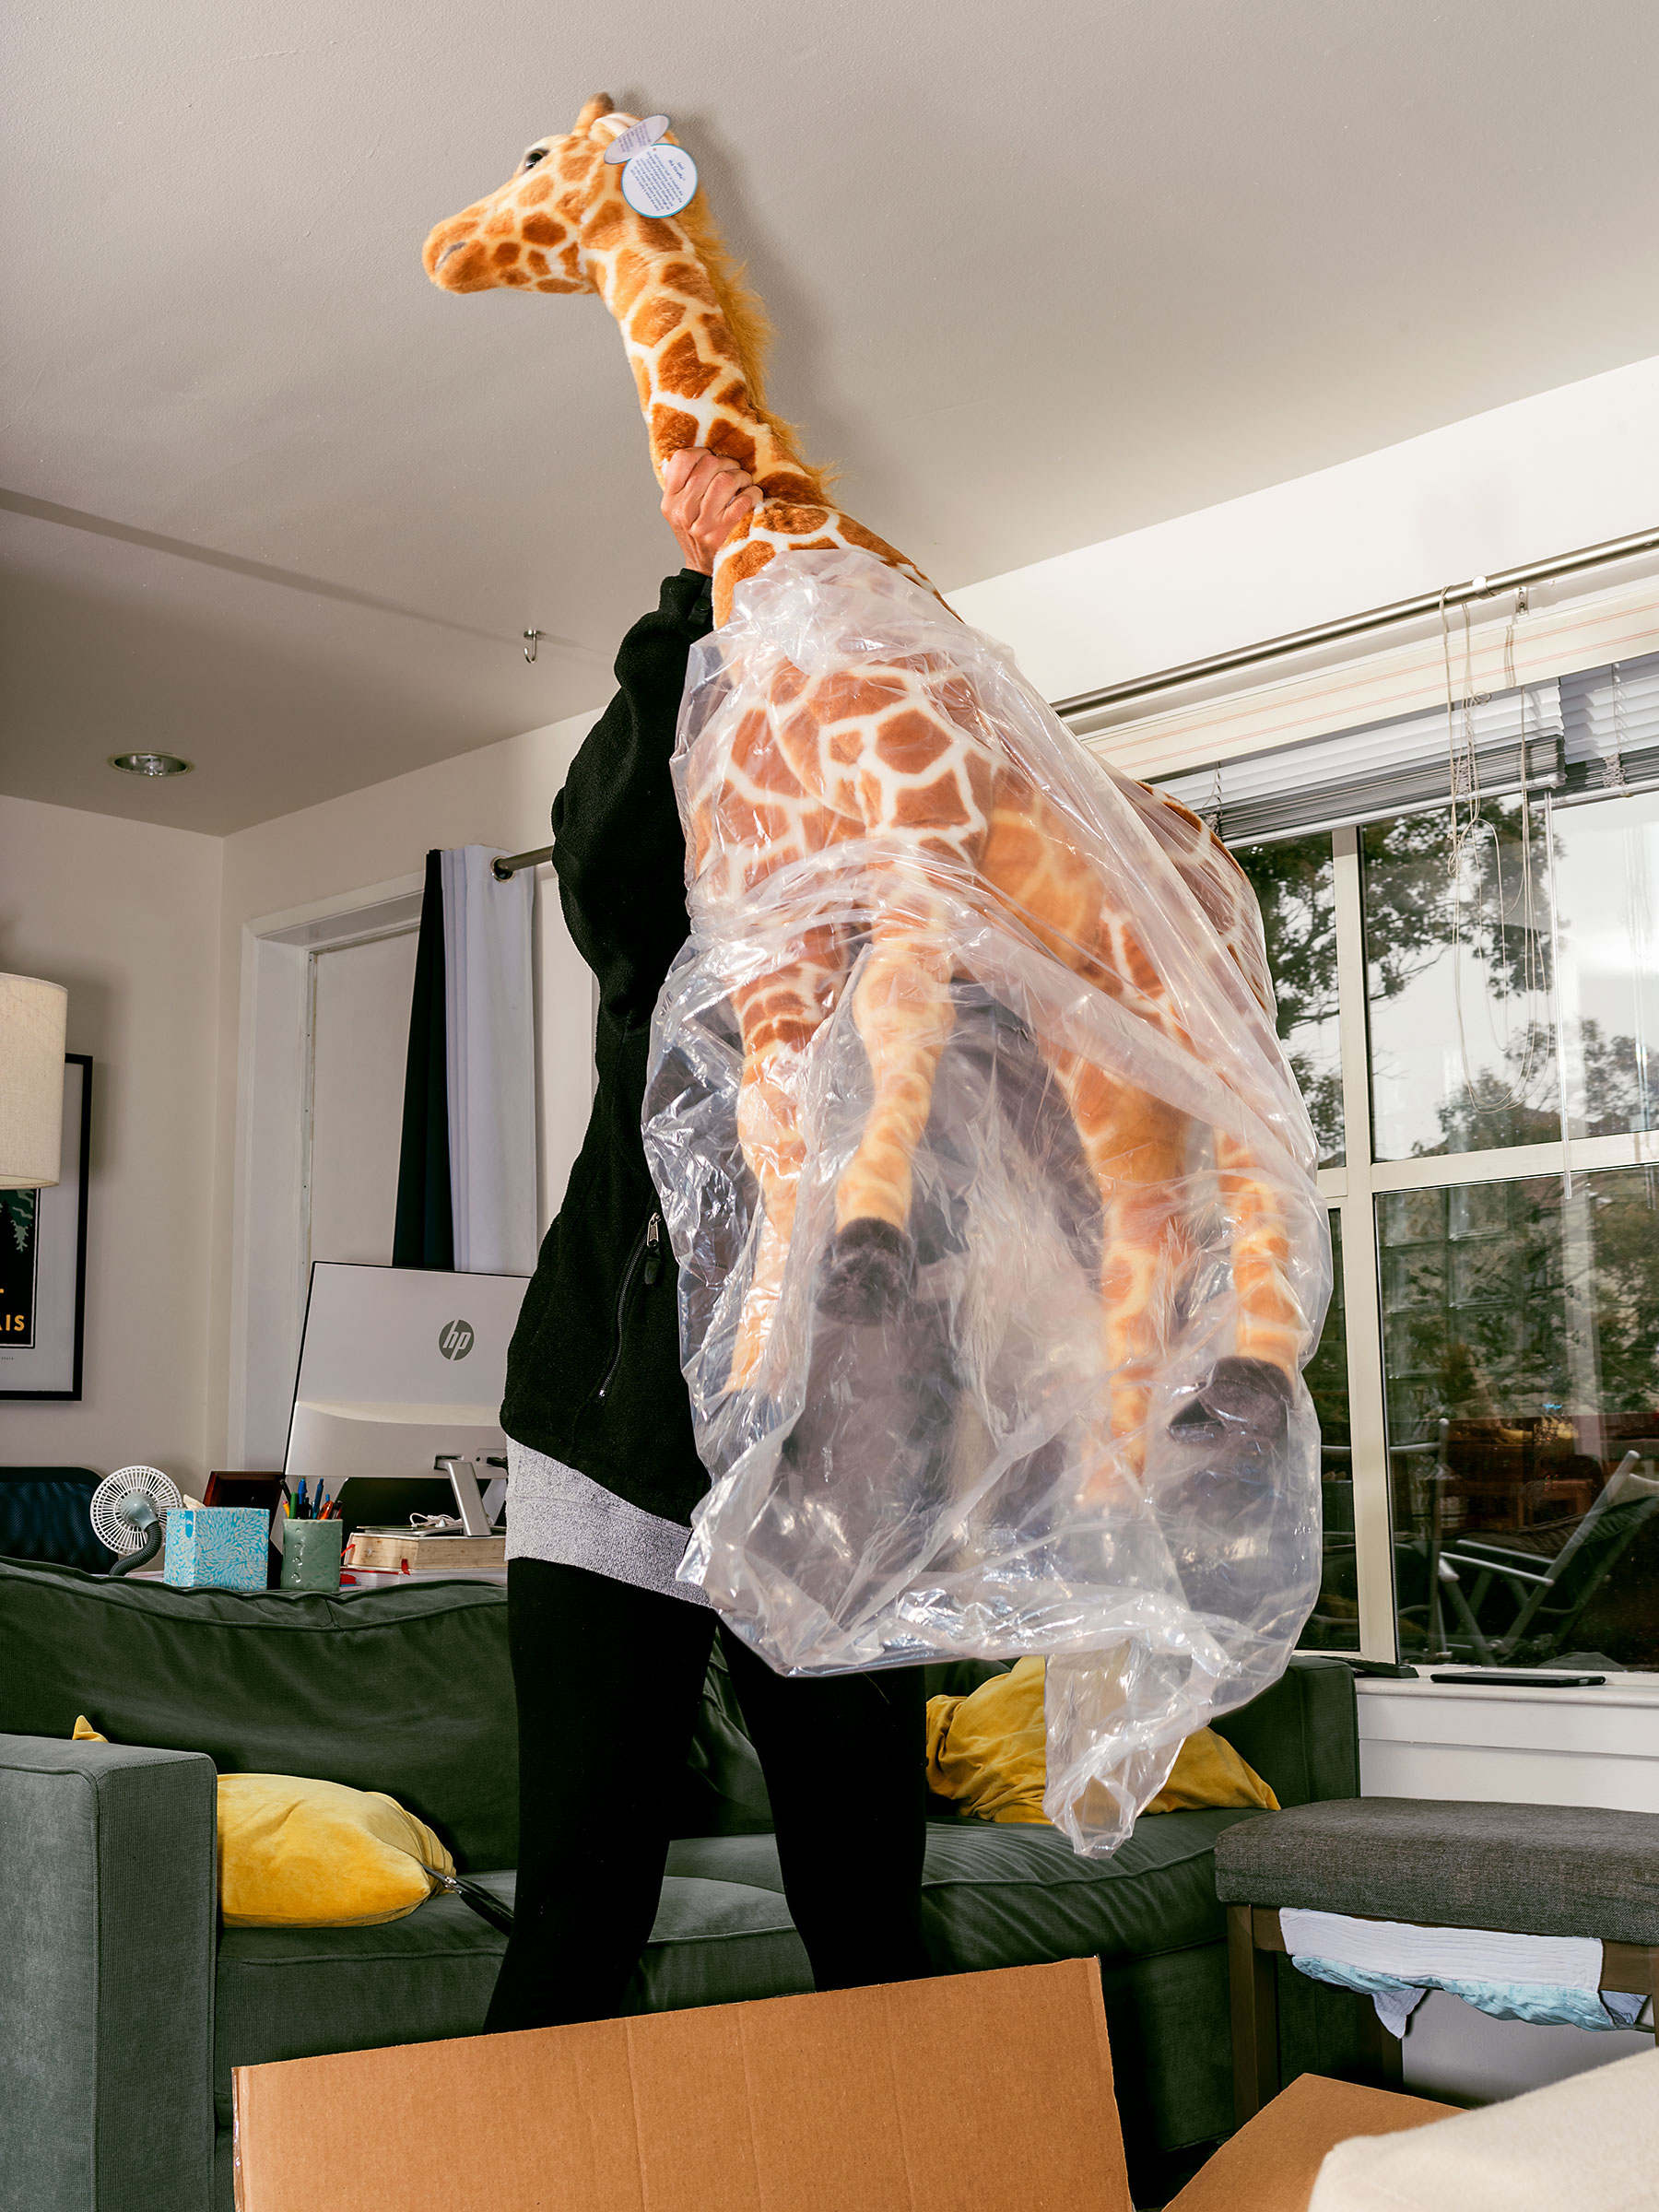 Jani the giraffe is unpacked in San Francisco. (Kelsey McClellan for TIME)